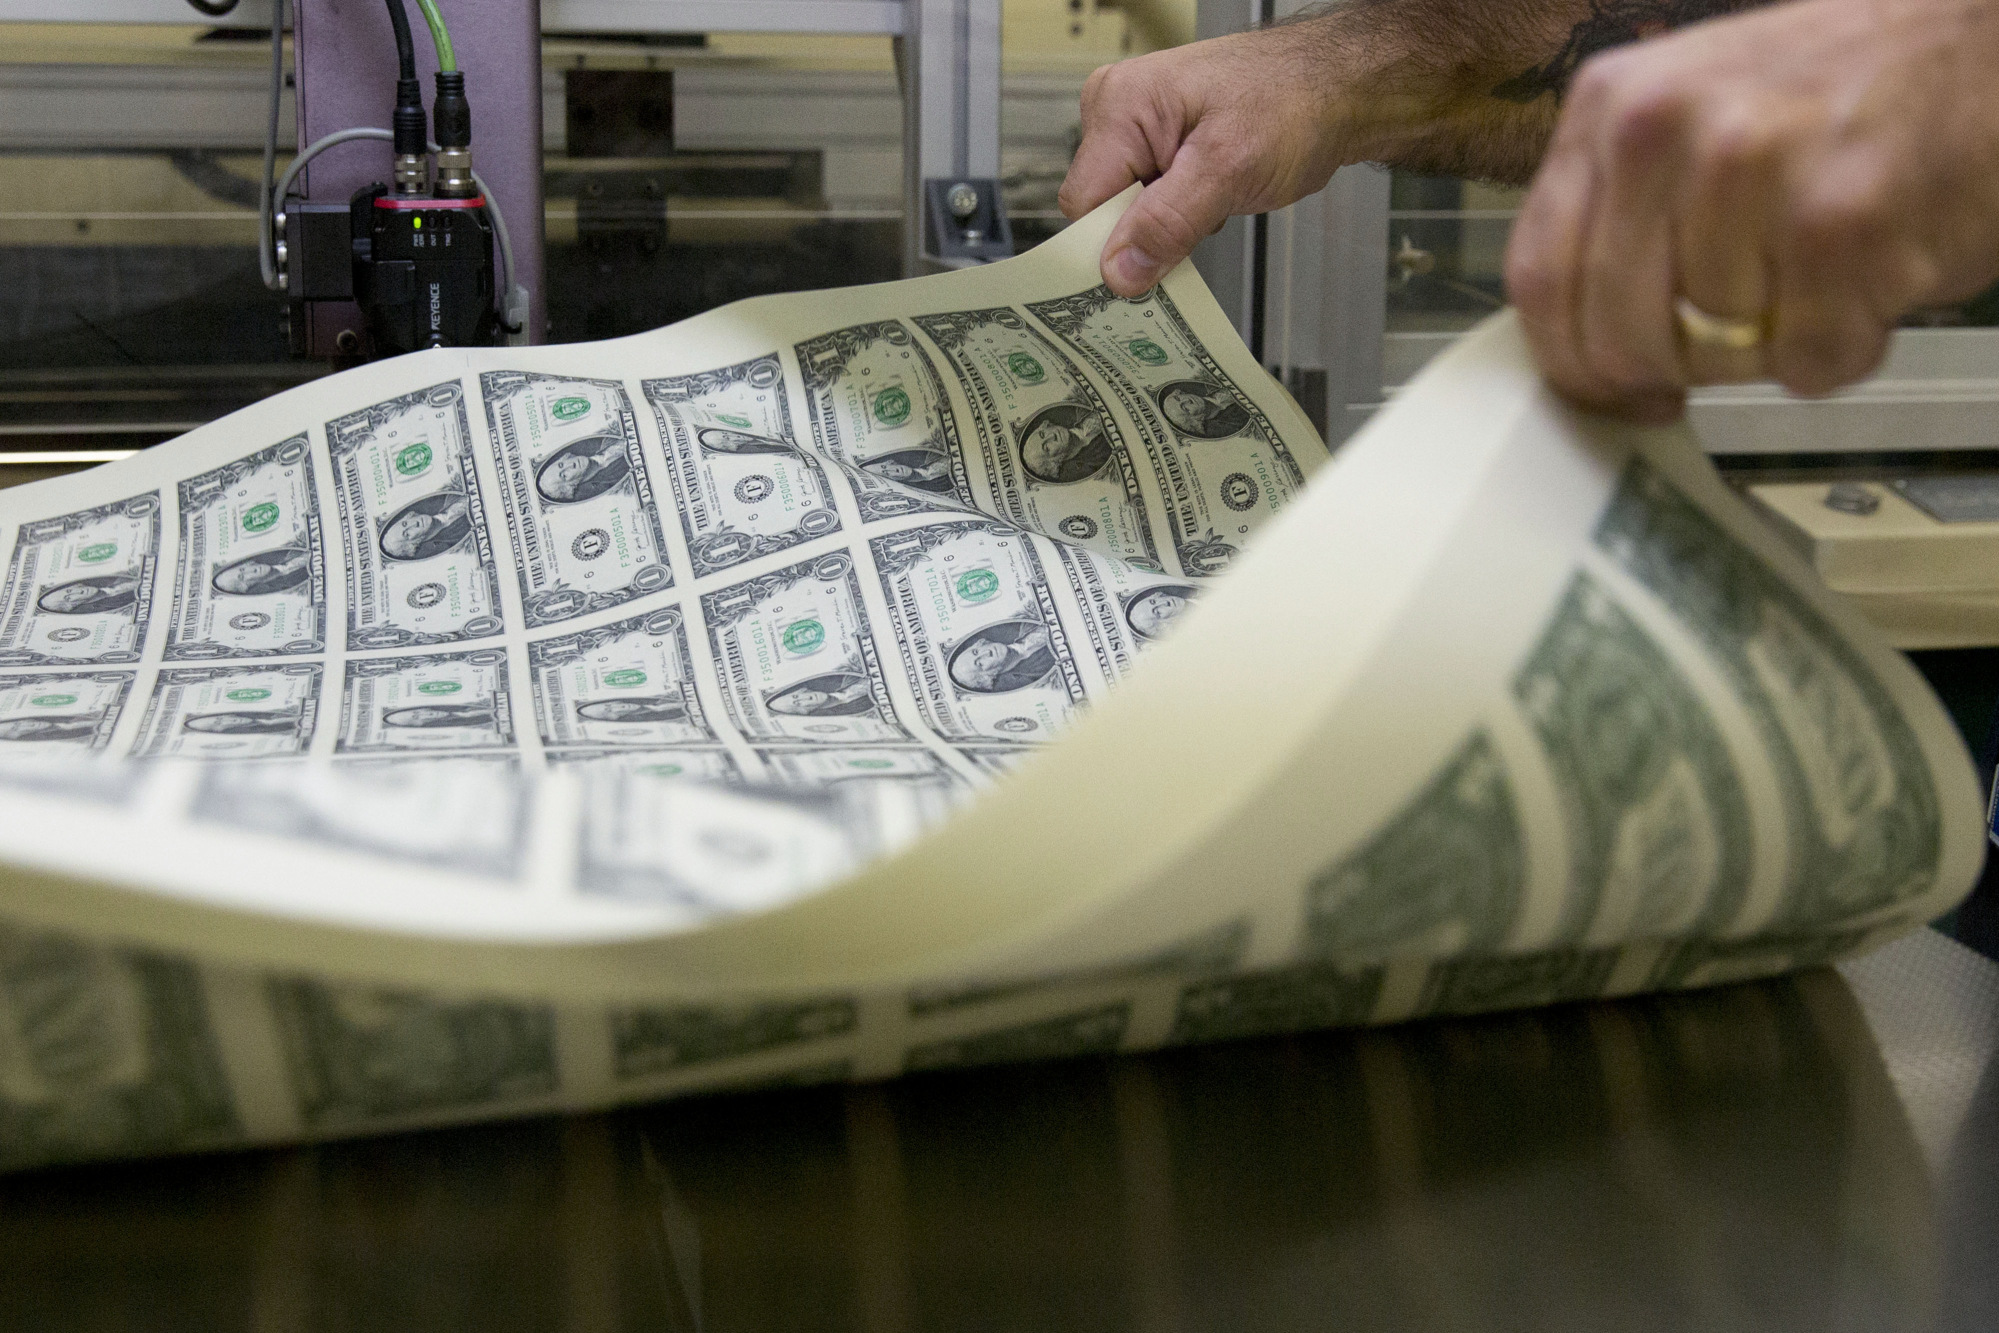 Coronavirus Bills Are So Big, Only Money-Printing Can Pay Them - Bloomberg